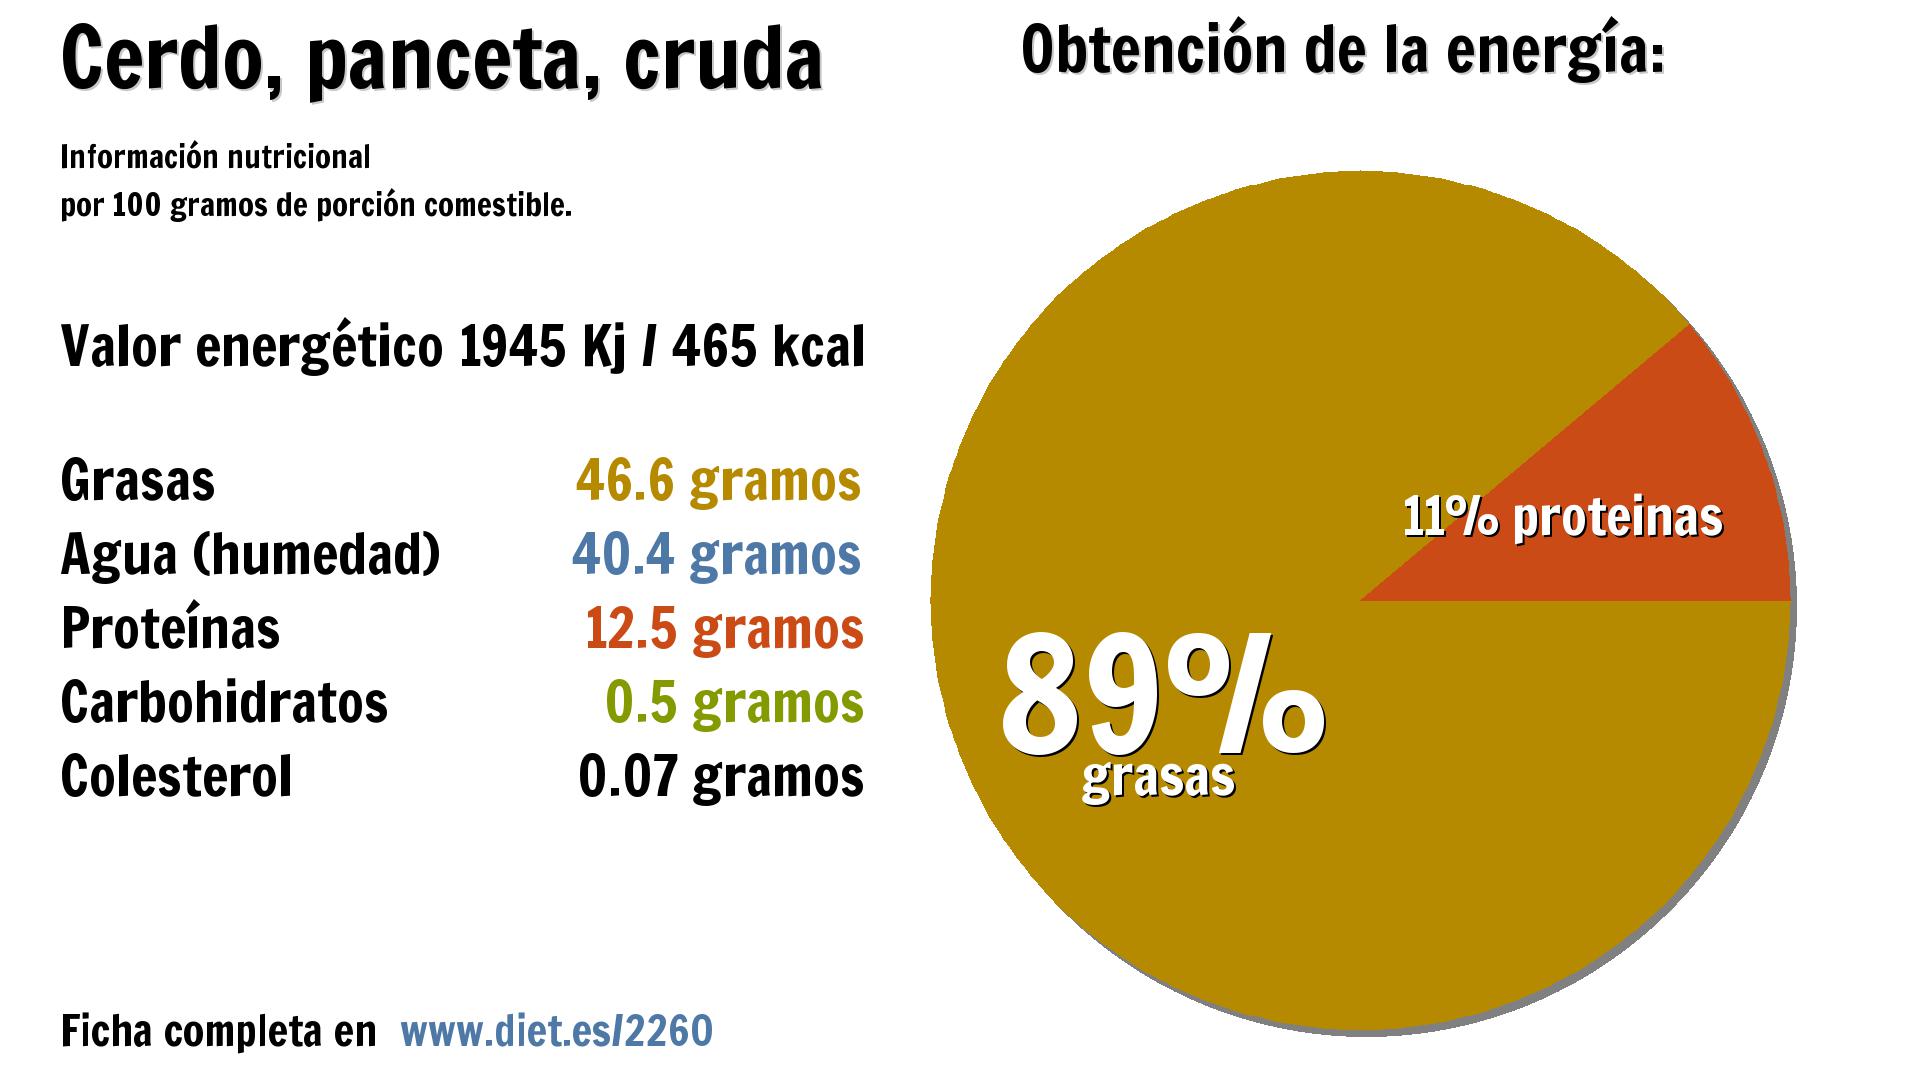 Cerdo, panceta, cruda: energía 1945 Kj, grasas 47 g., agua 40 g., proteínas 13 g. y carbohidratos 1 g.